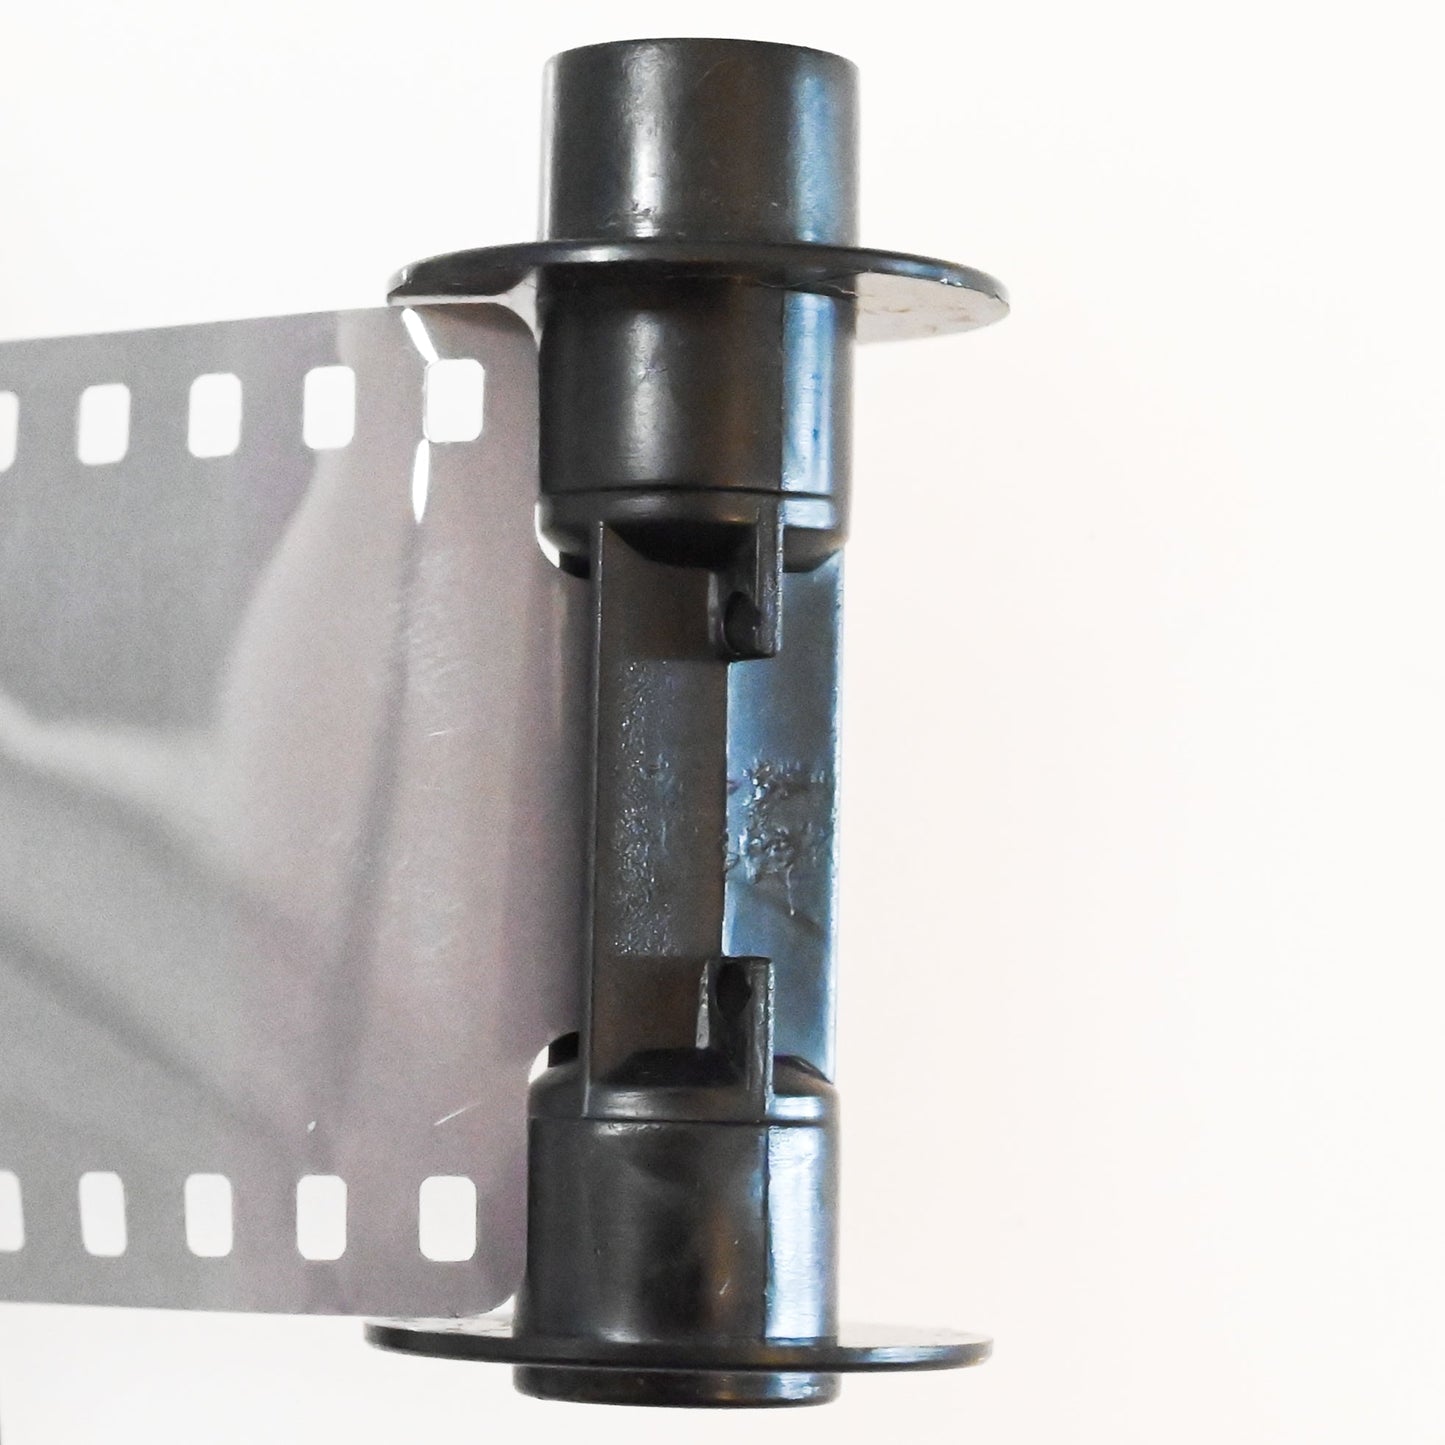 [Free shipping 10 piece set] MARIX color negative film 400D 24 sheets MARIX Color movie NegaFilm